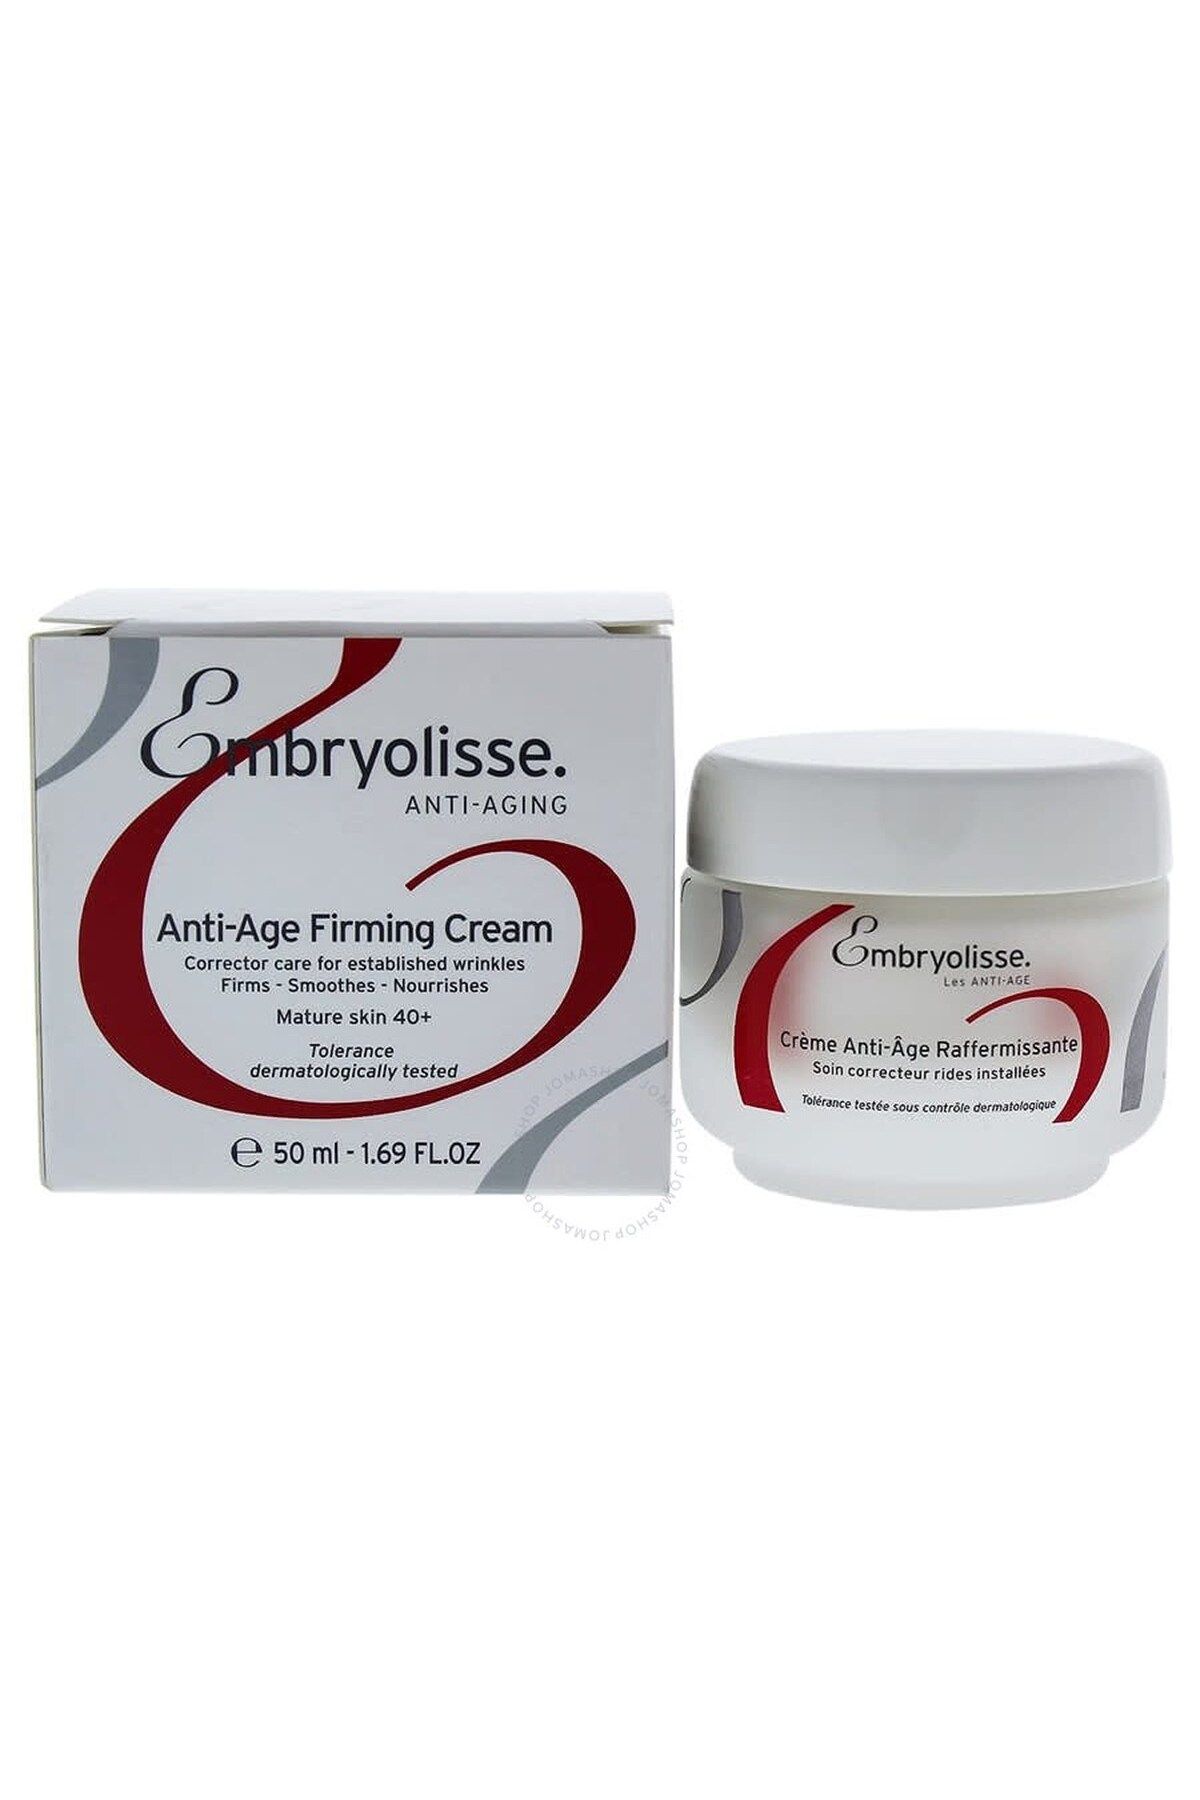 Embryolisse Anti-age Firming Cream 50 ml